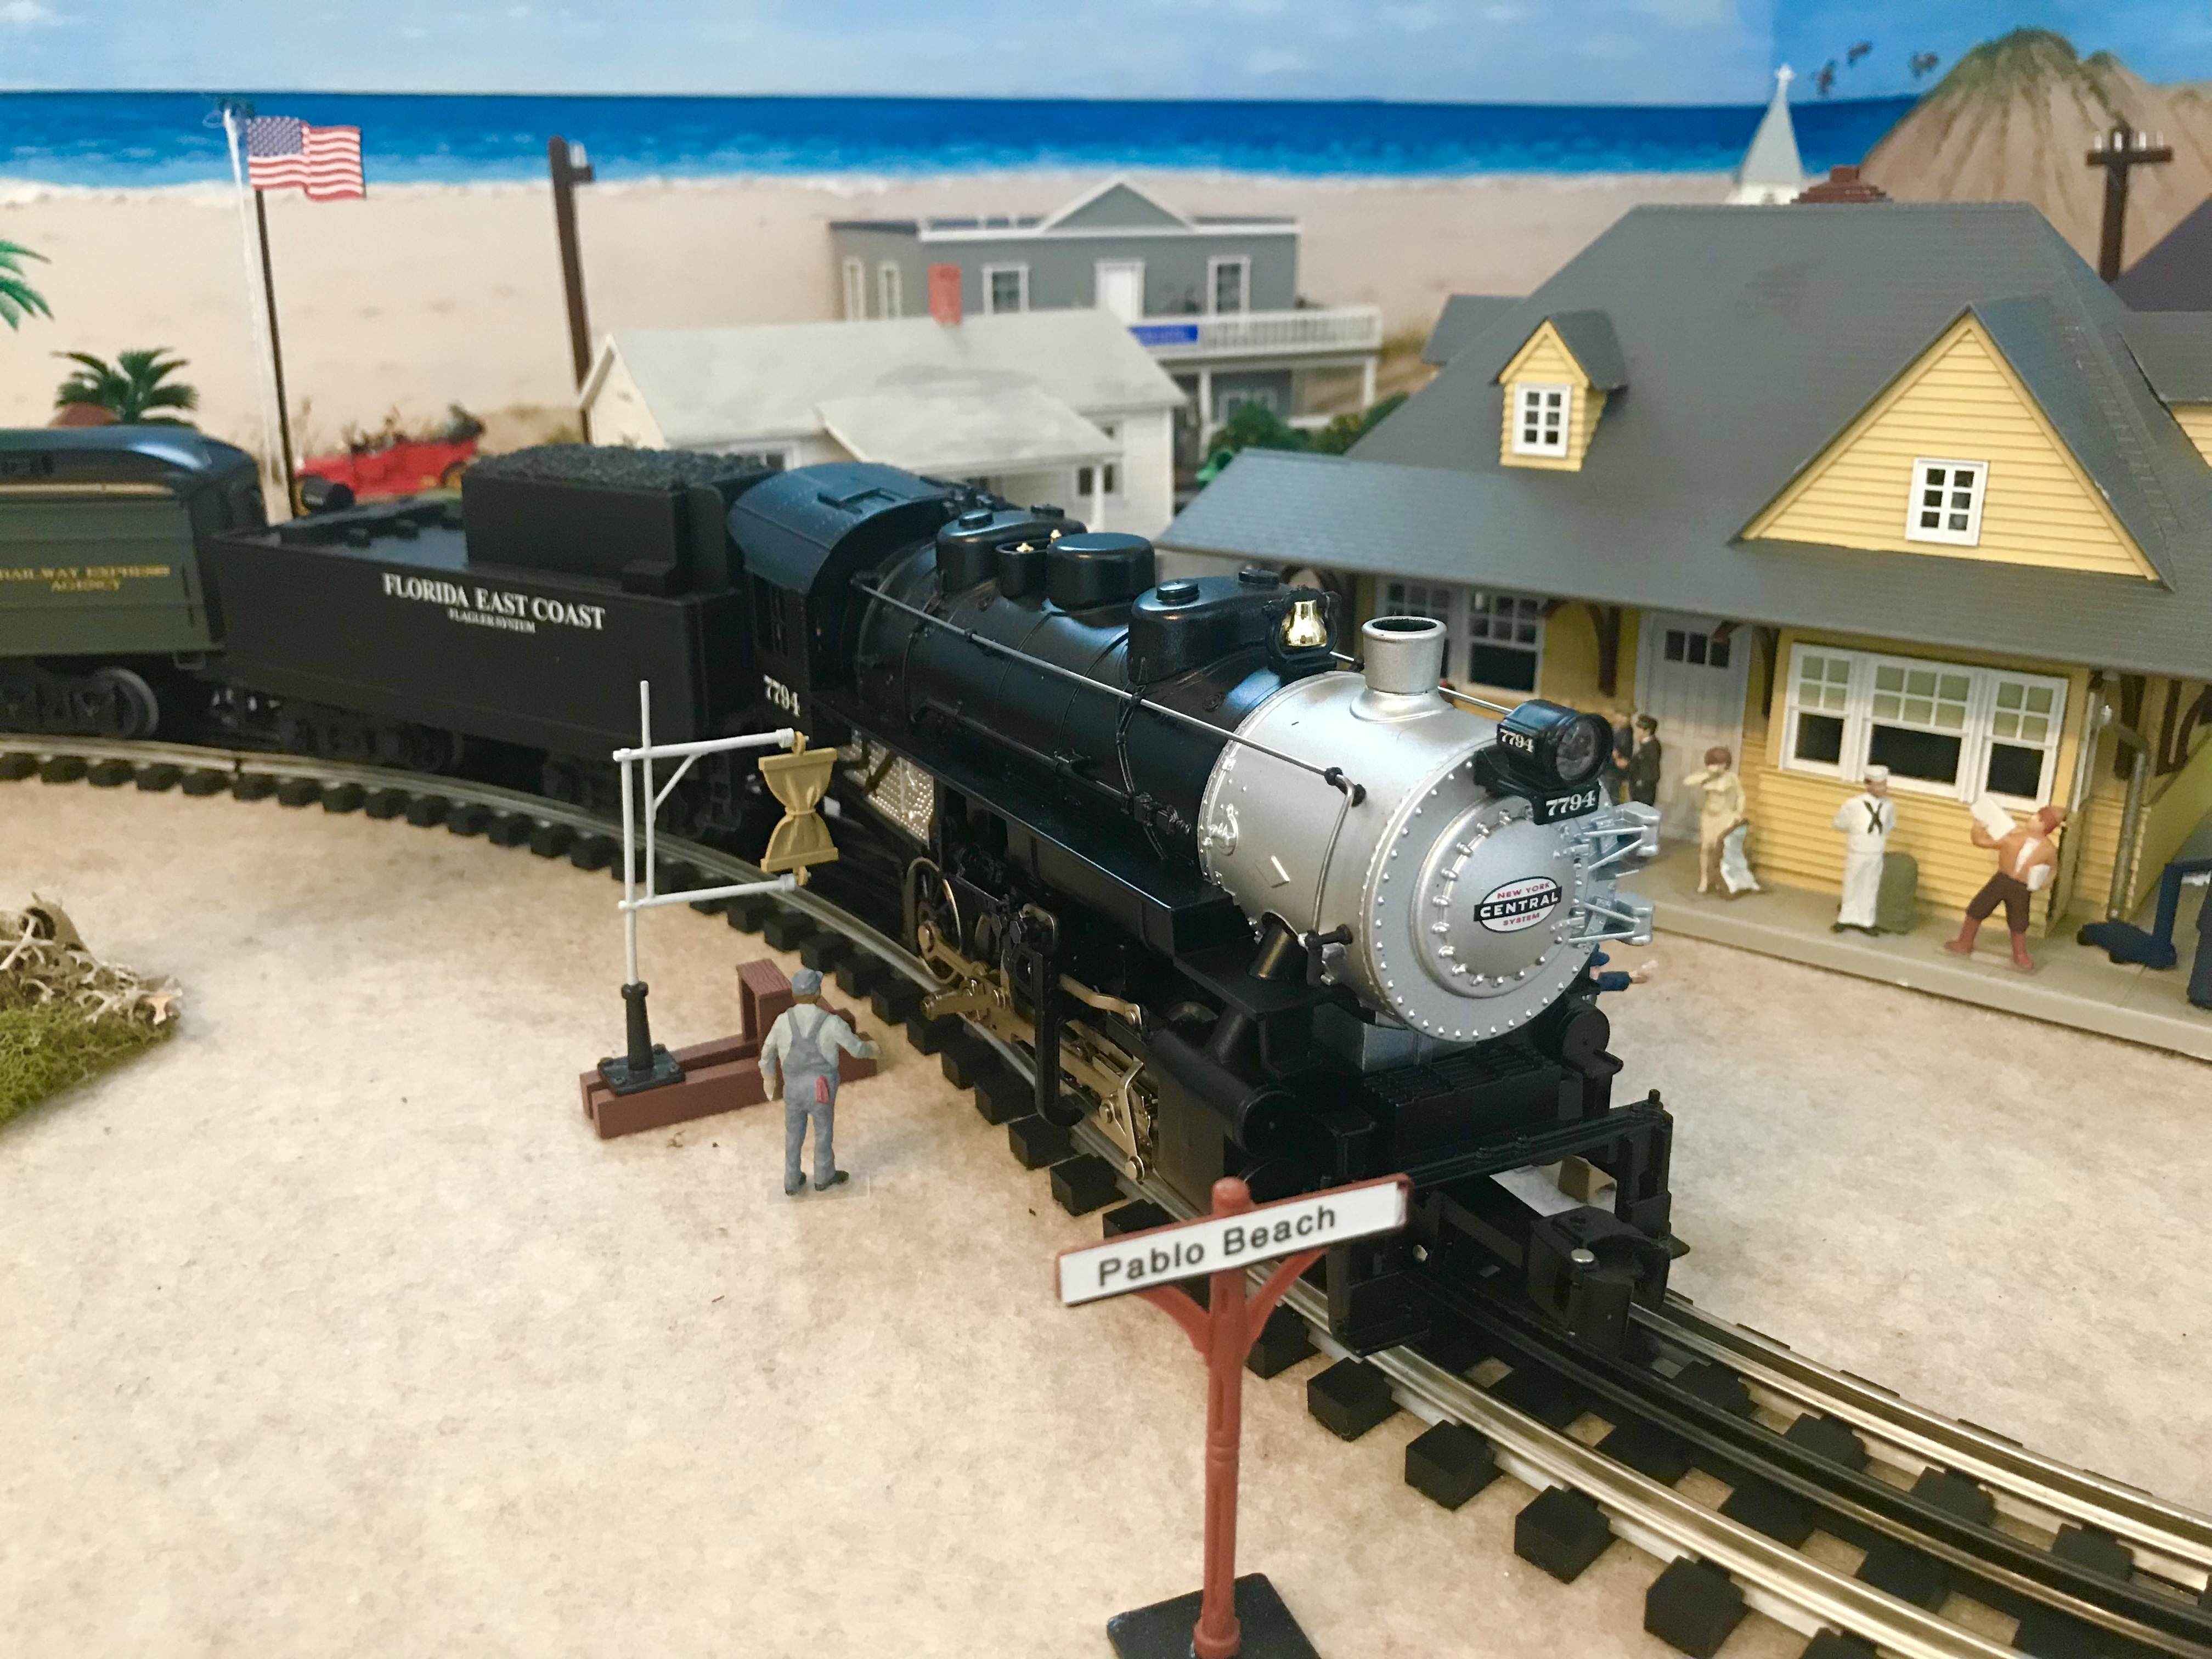 Model Train showing historic Pablo Beach, Florida